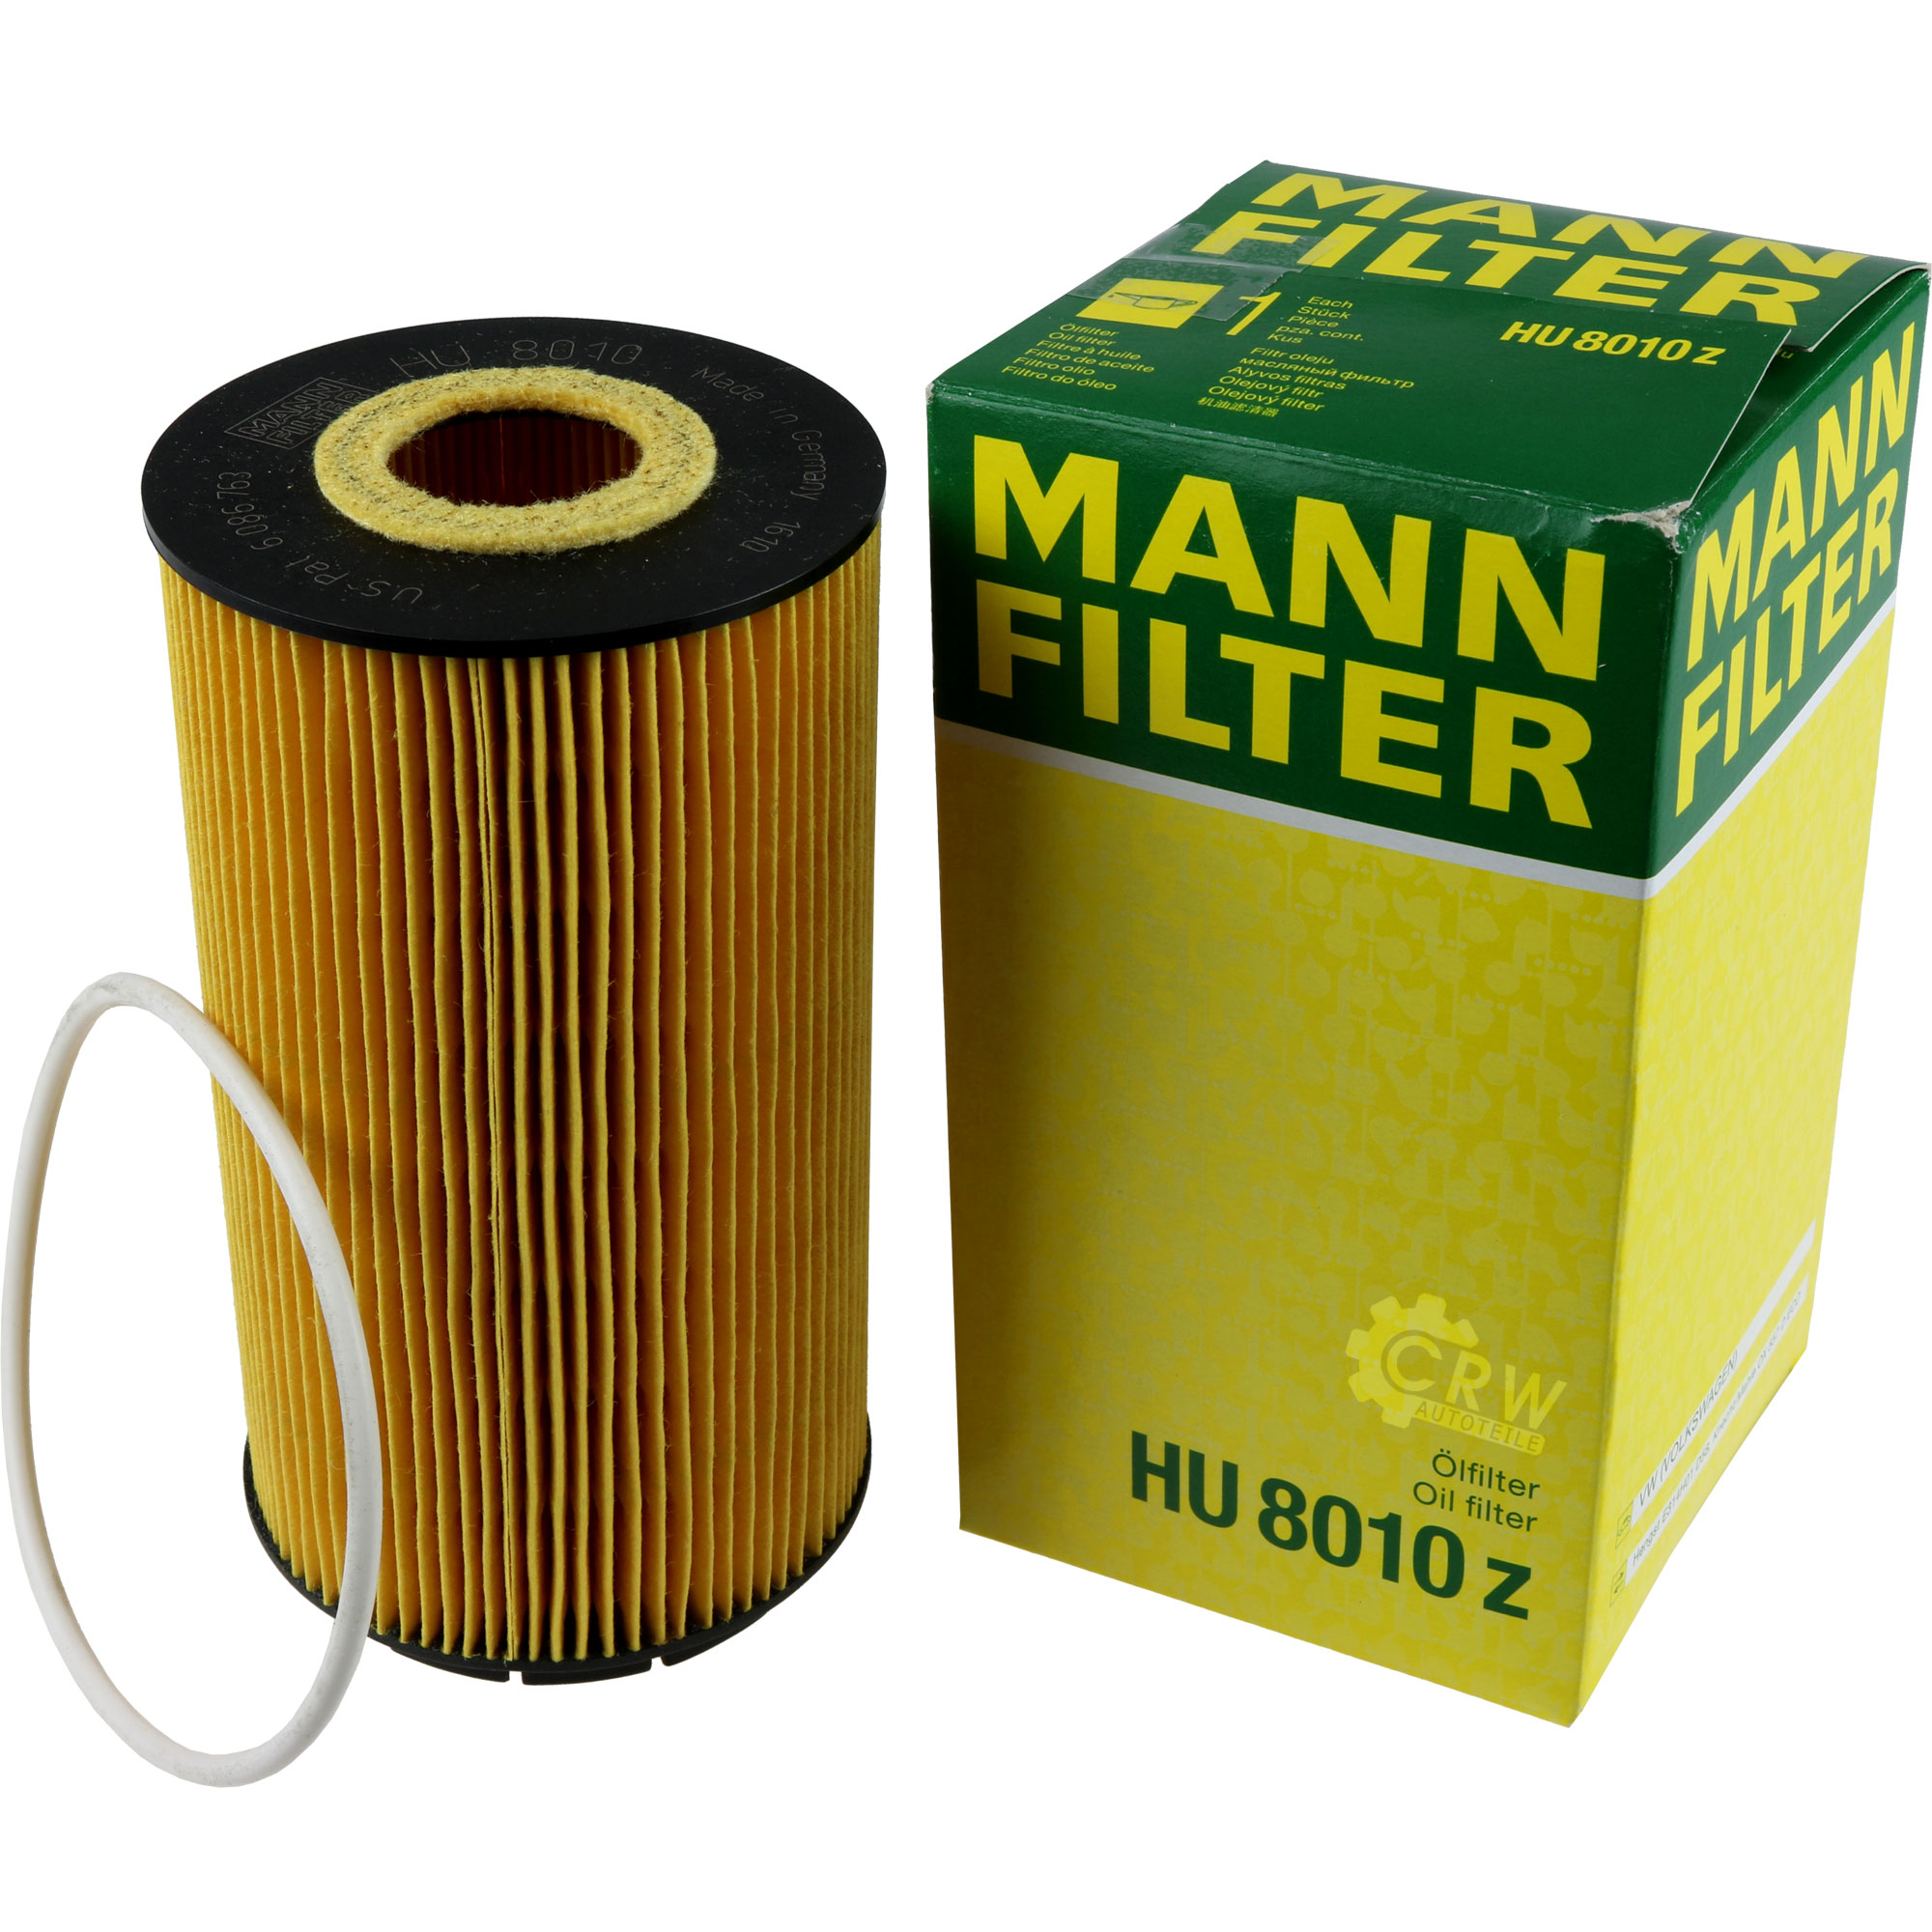 MANN-FILTER Ölfilter HU 8010 z Oil Filter